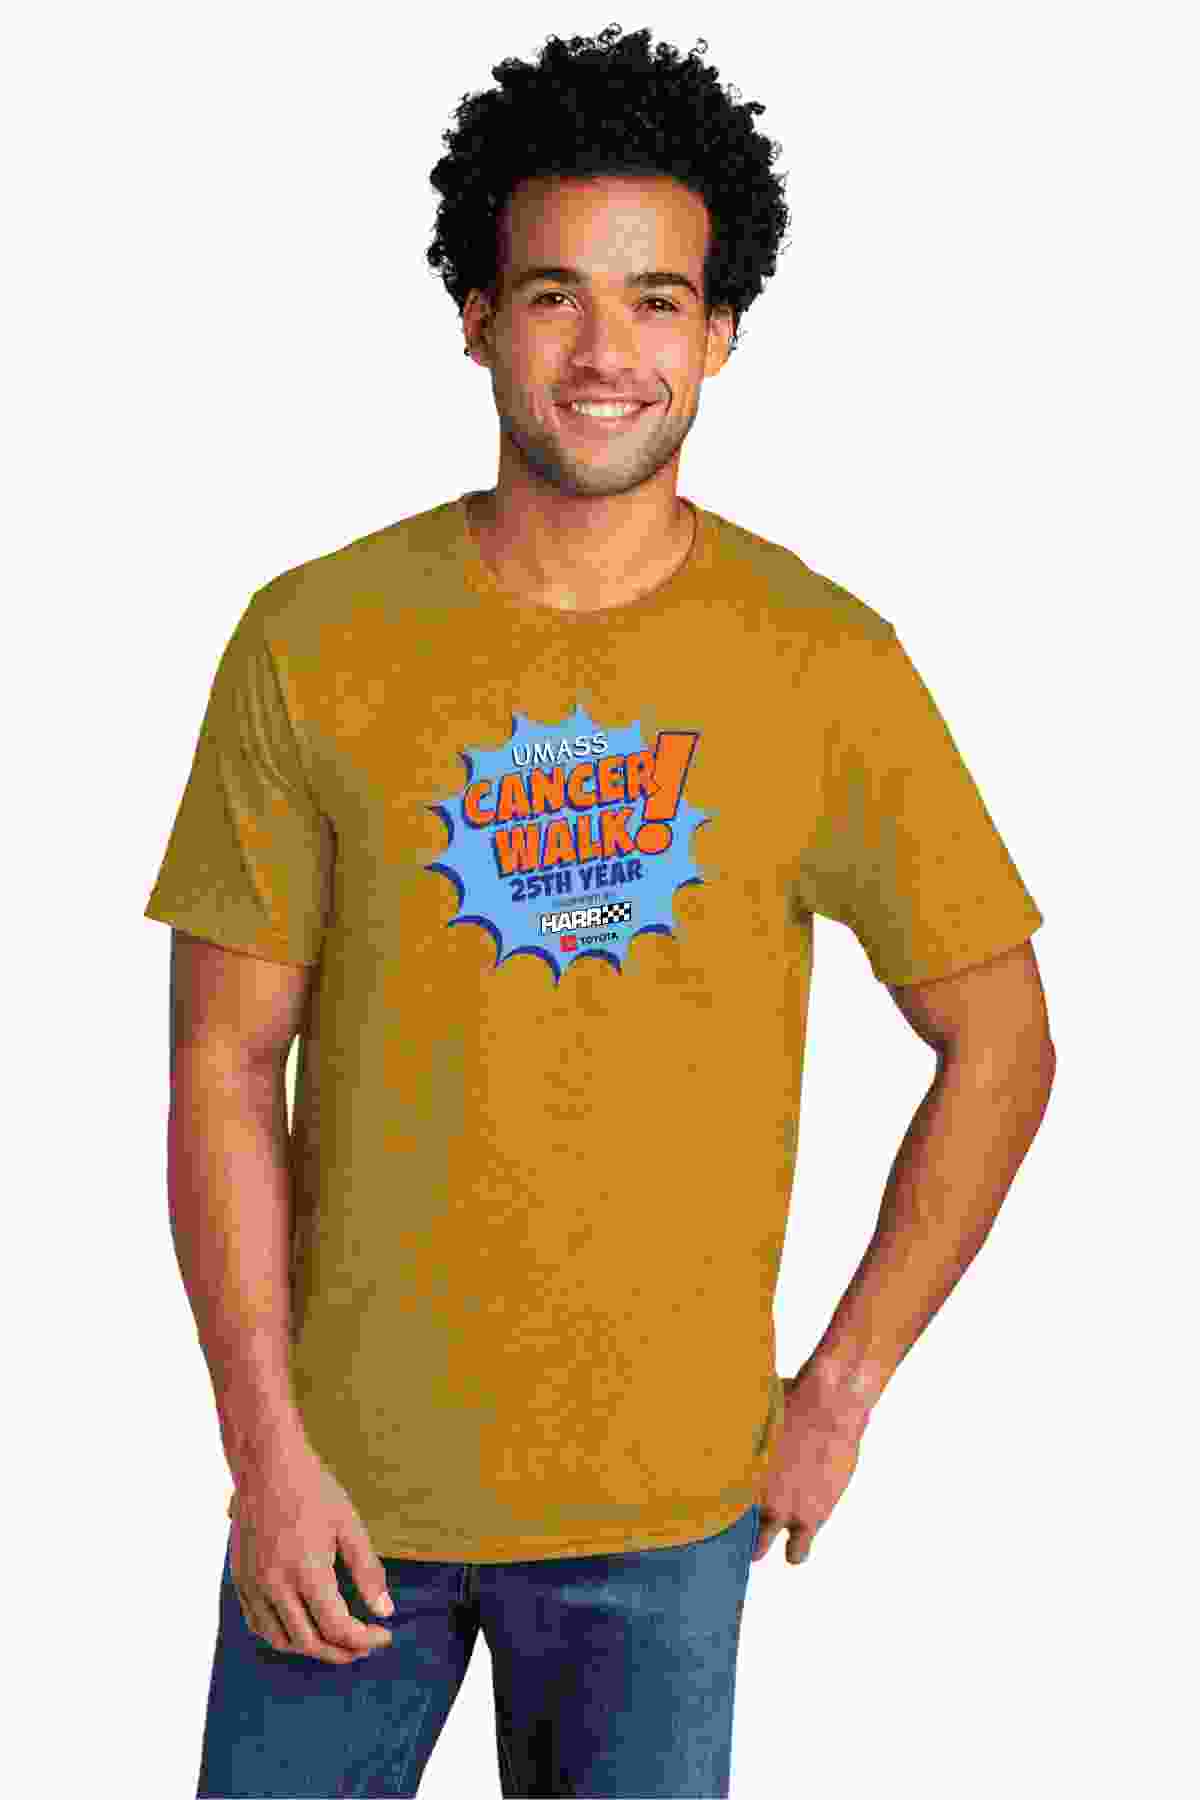 T-shirt with UMass Cancer Walk logo